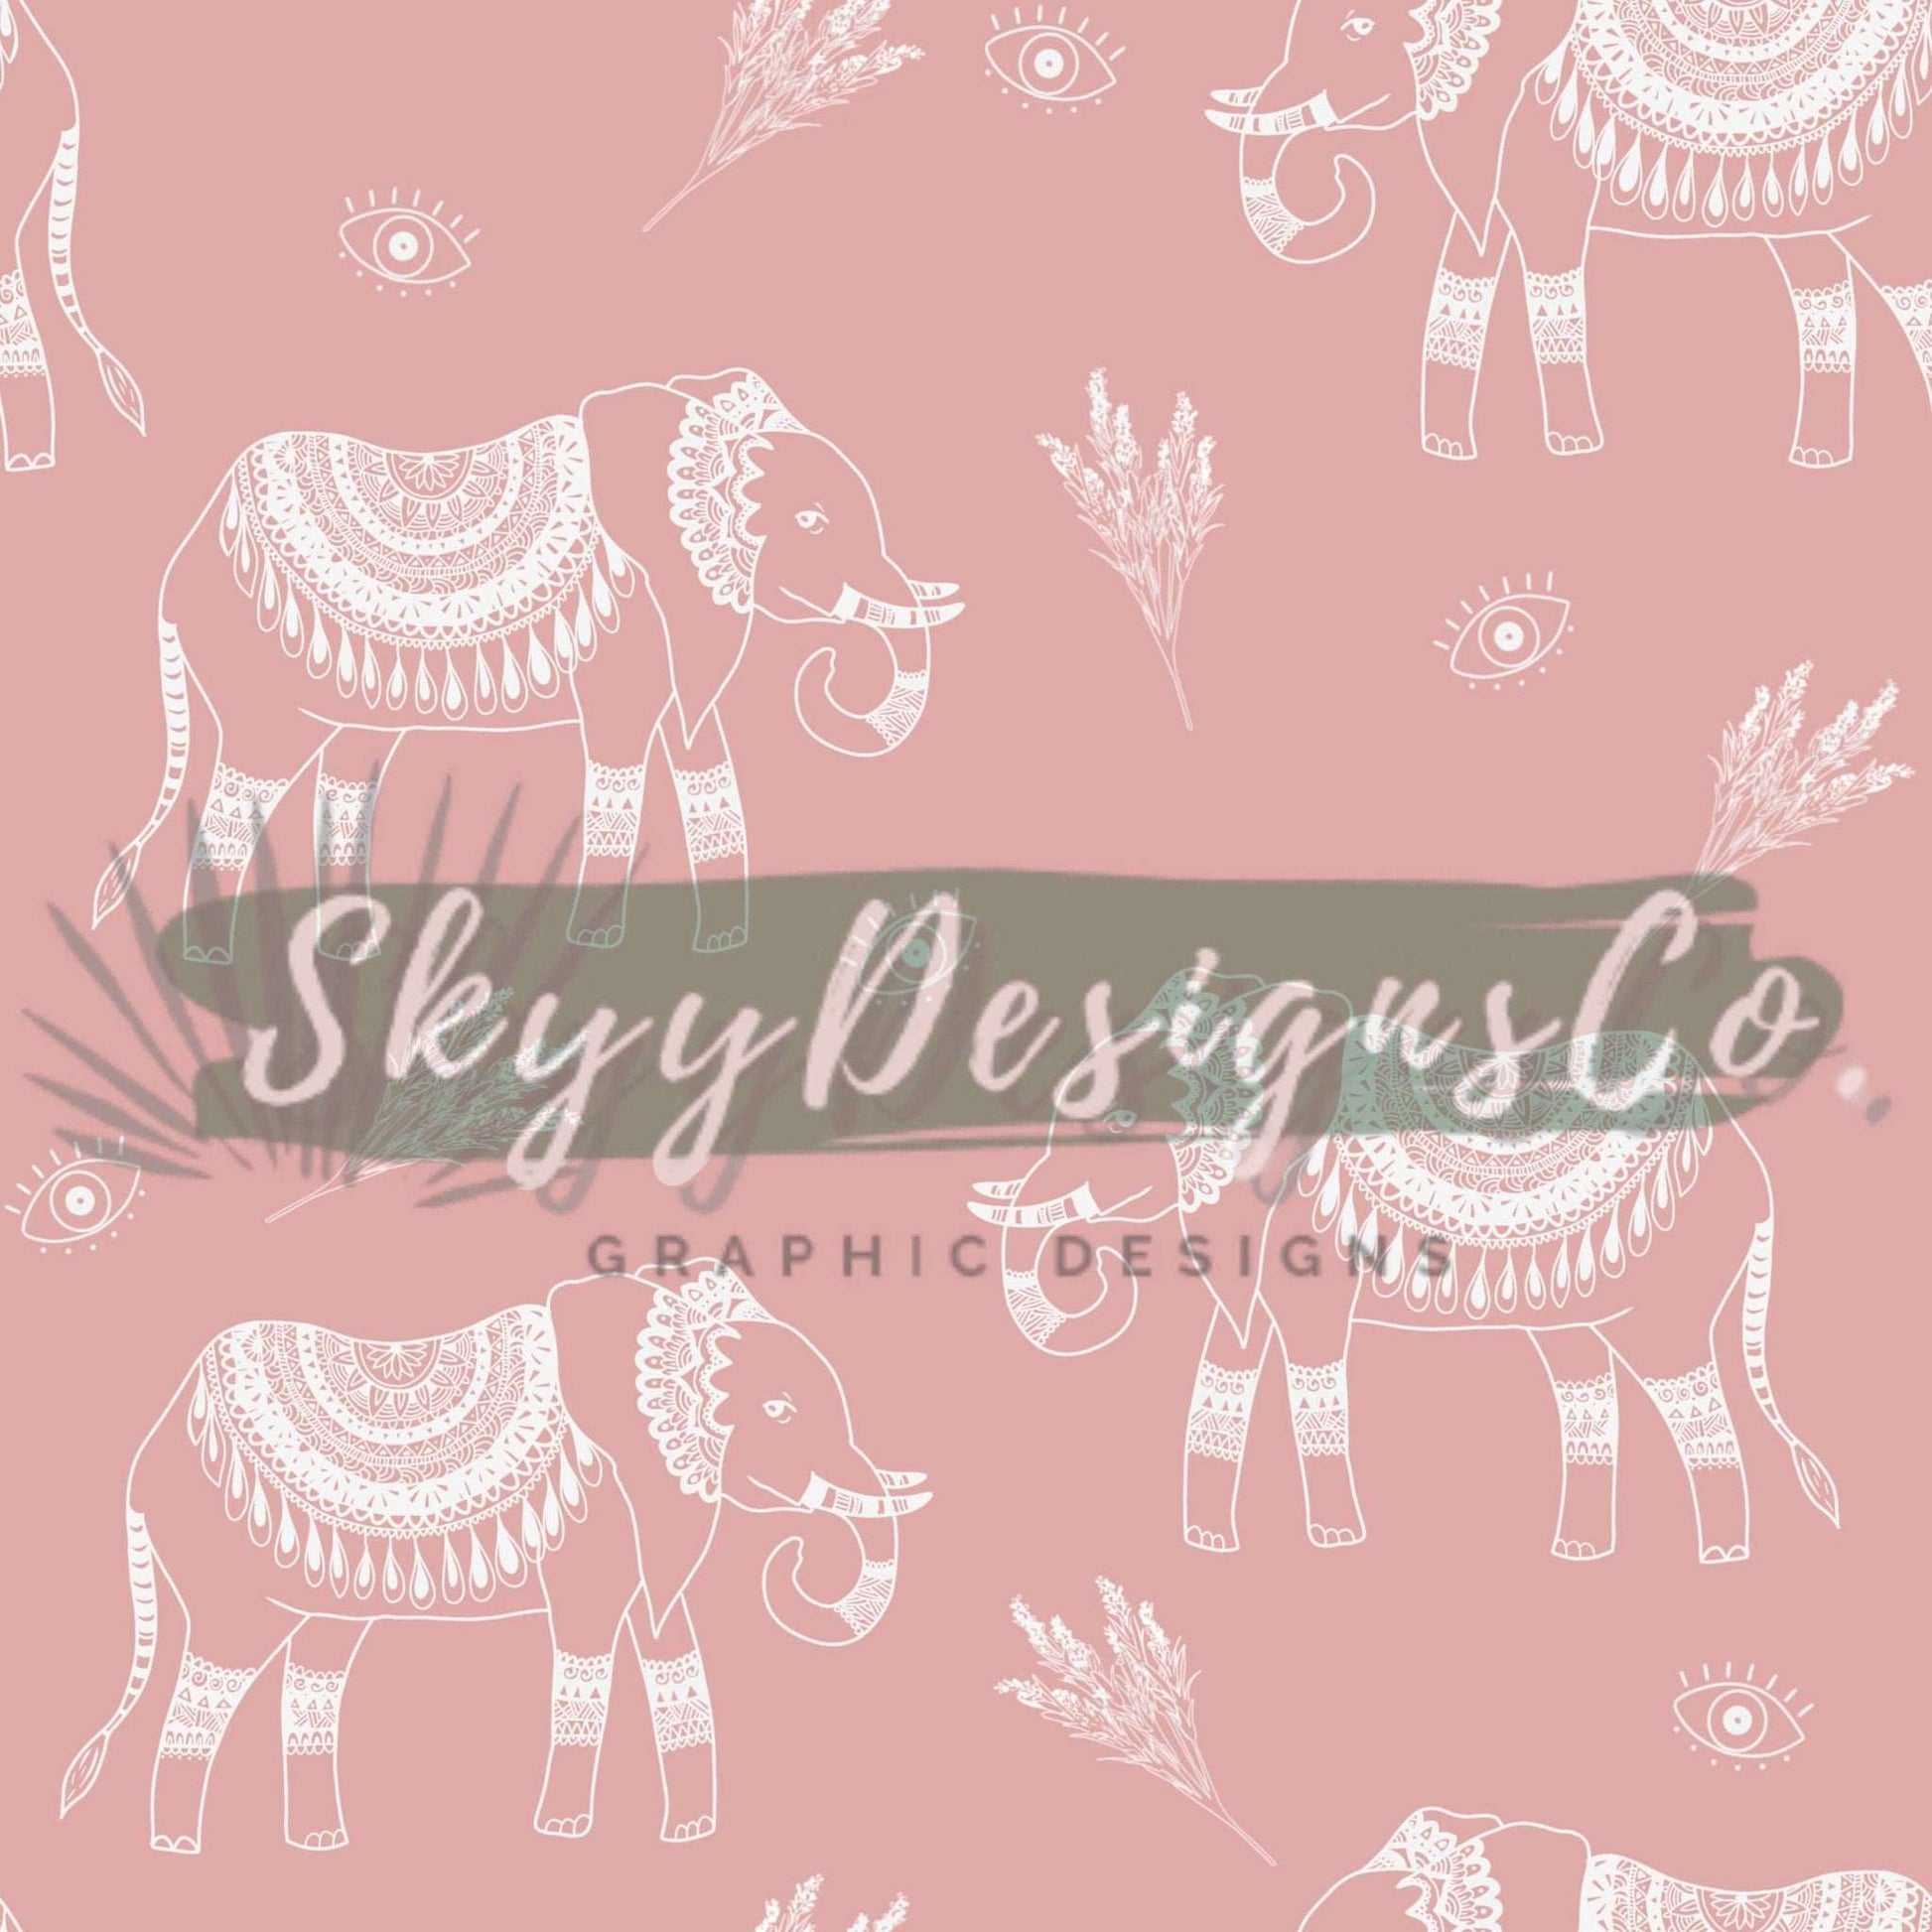 Boho elephant seamless repeat pattern - SkyyDesignsCo | Seamless Pattern Designs